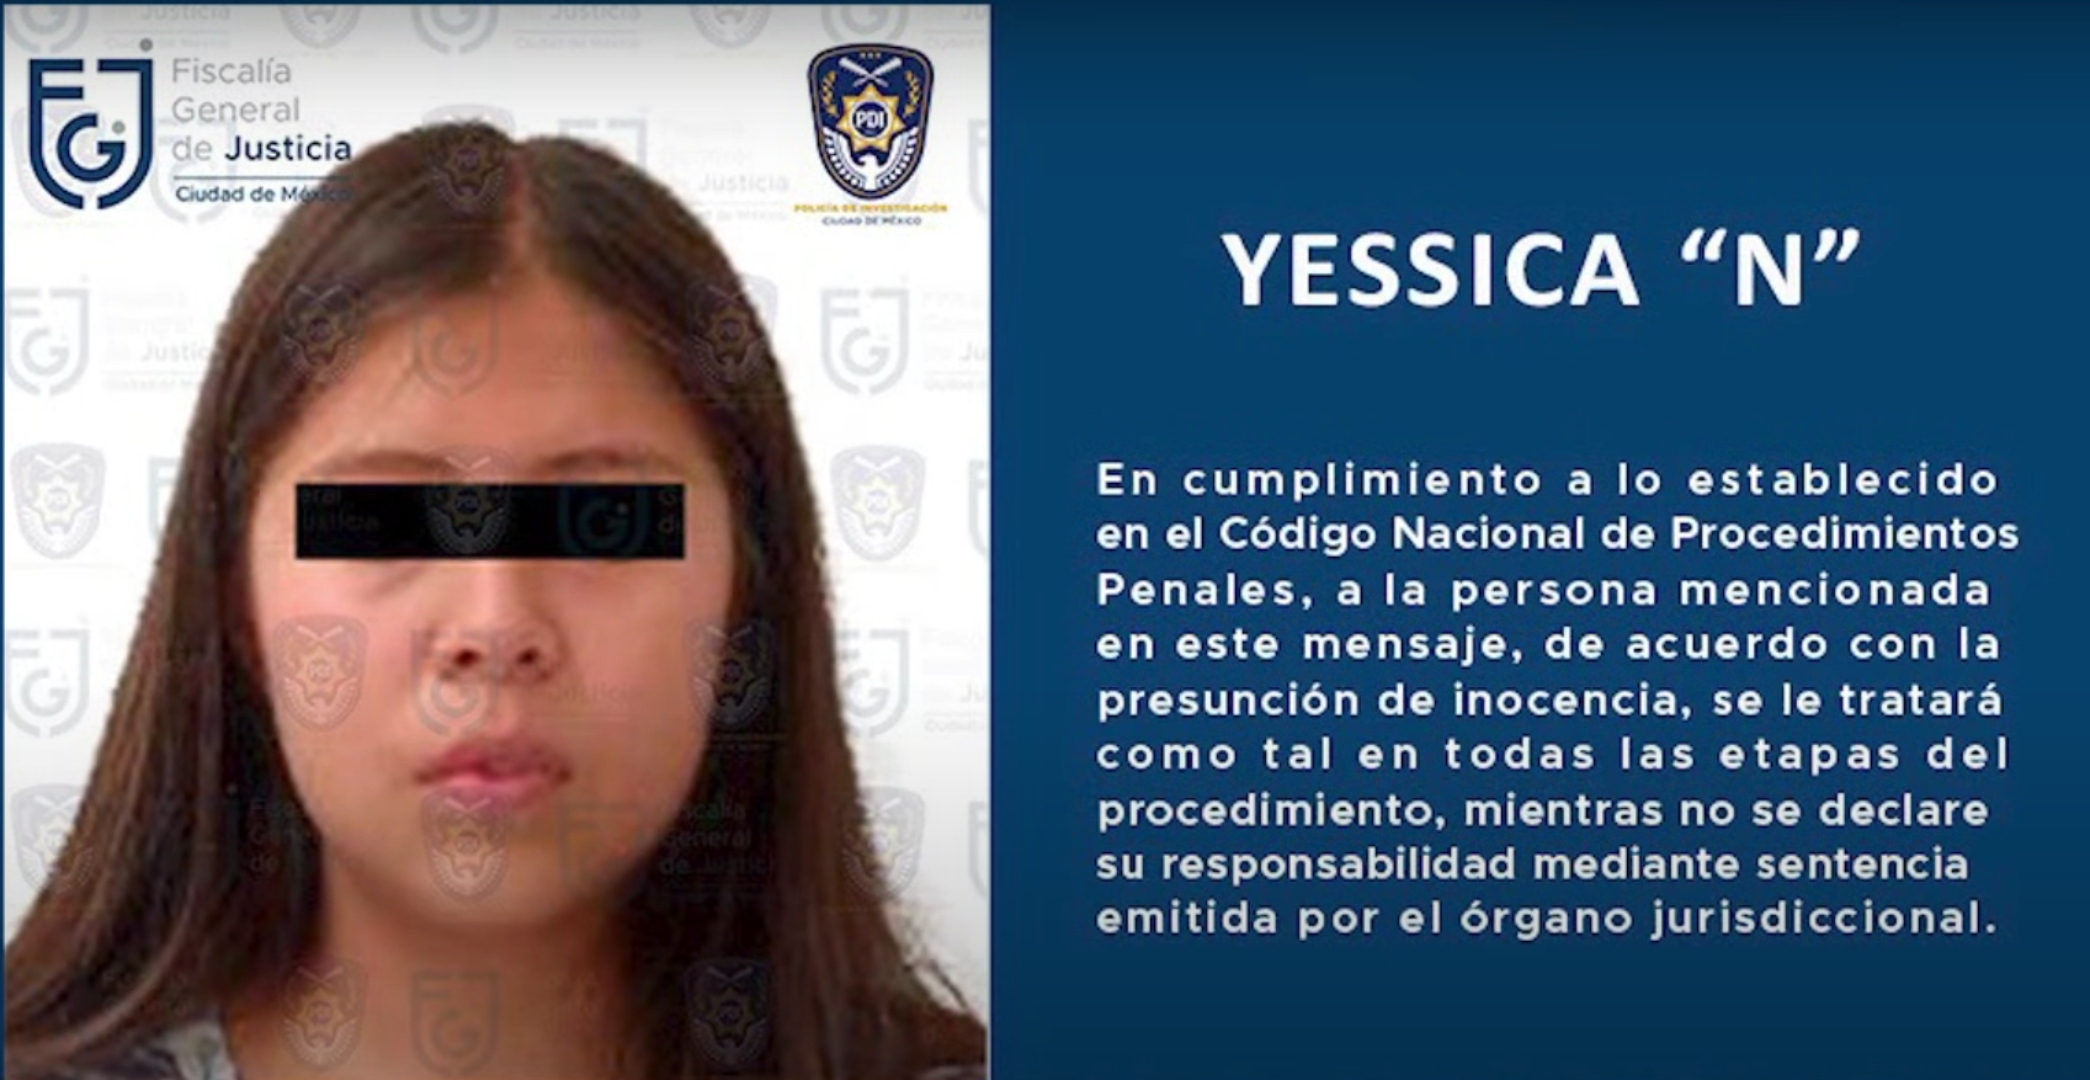 Cayó Jessica “N”, presunta responsable del feminicidio de Patxy Ximena afuera de Bachilleres 2